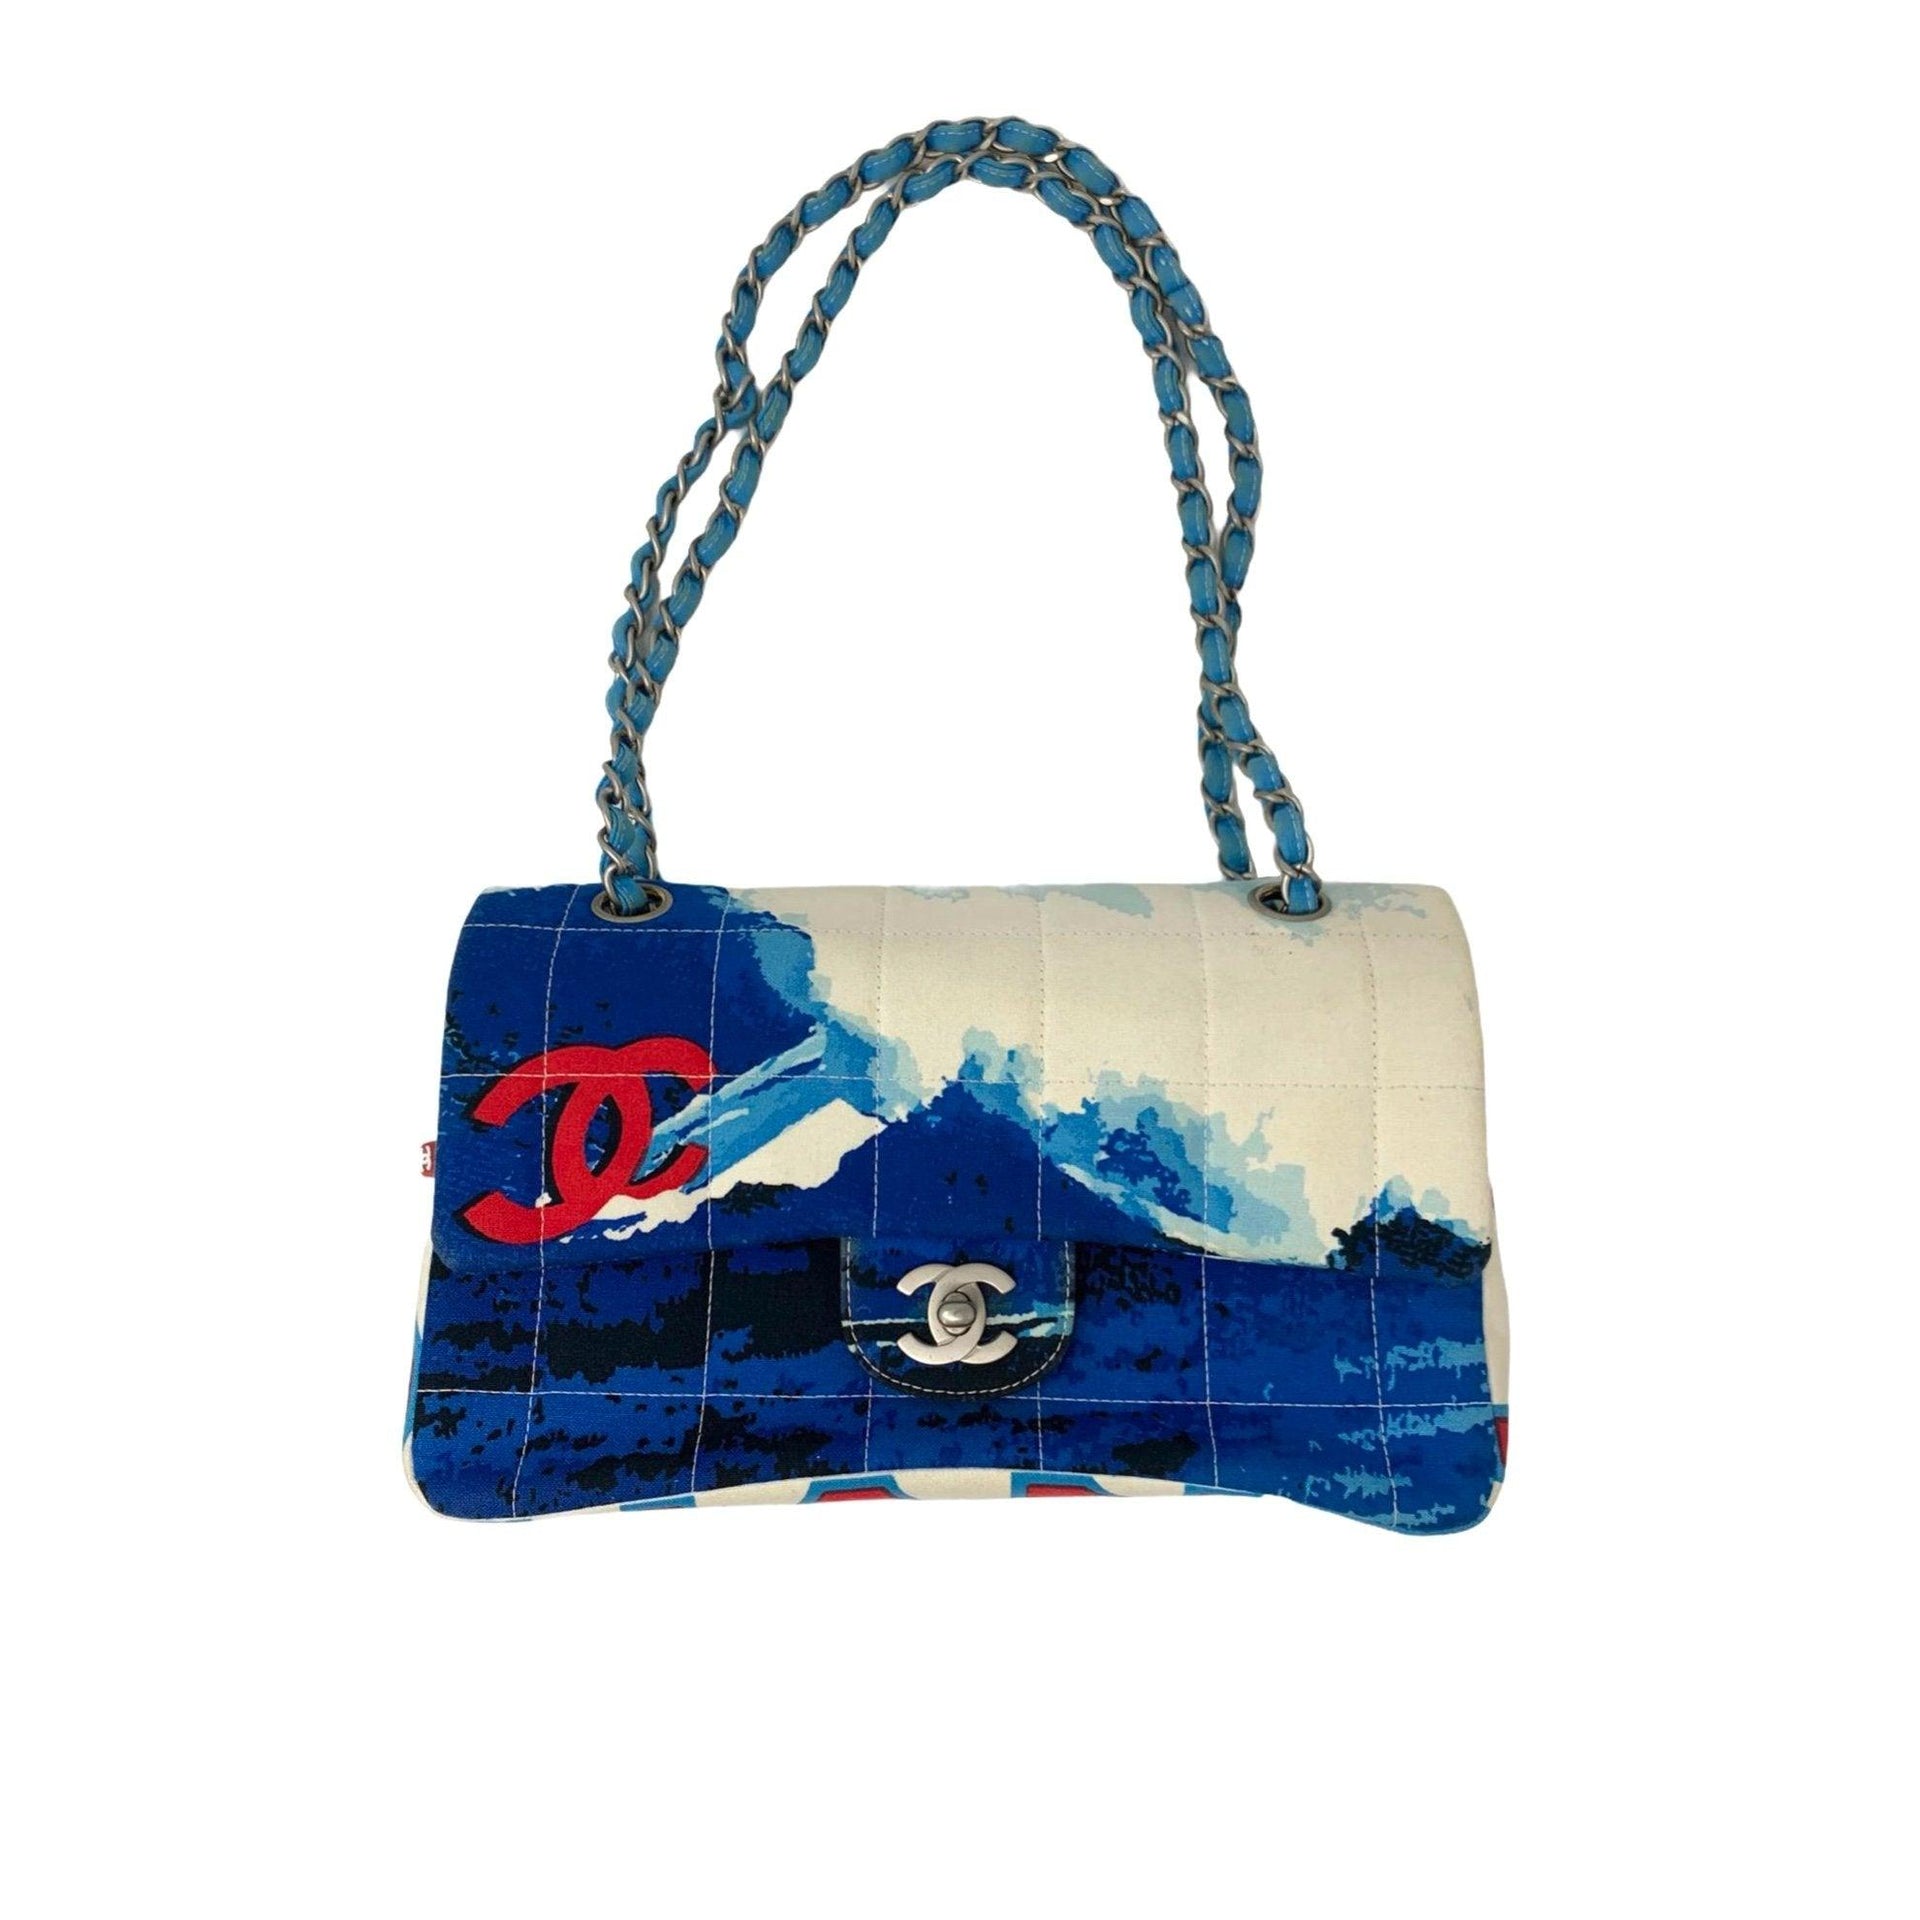 Chanel Surf Flap Bag - Treasures of NYC